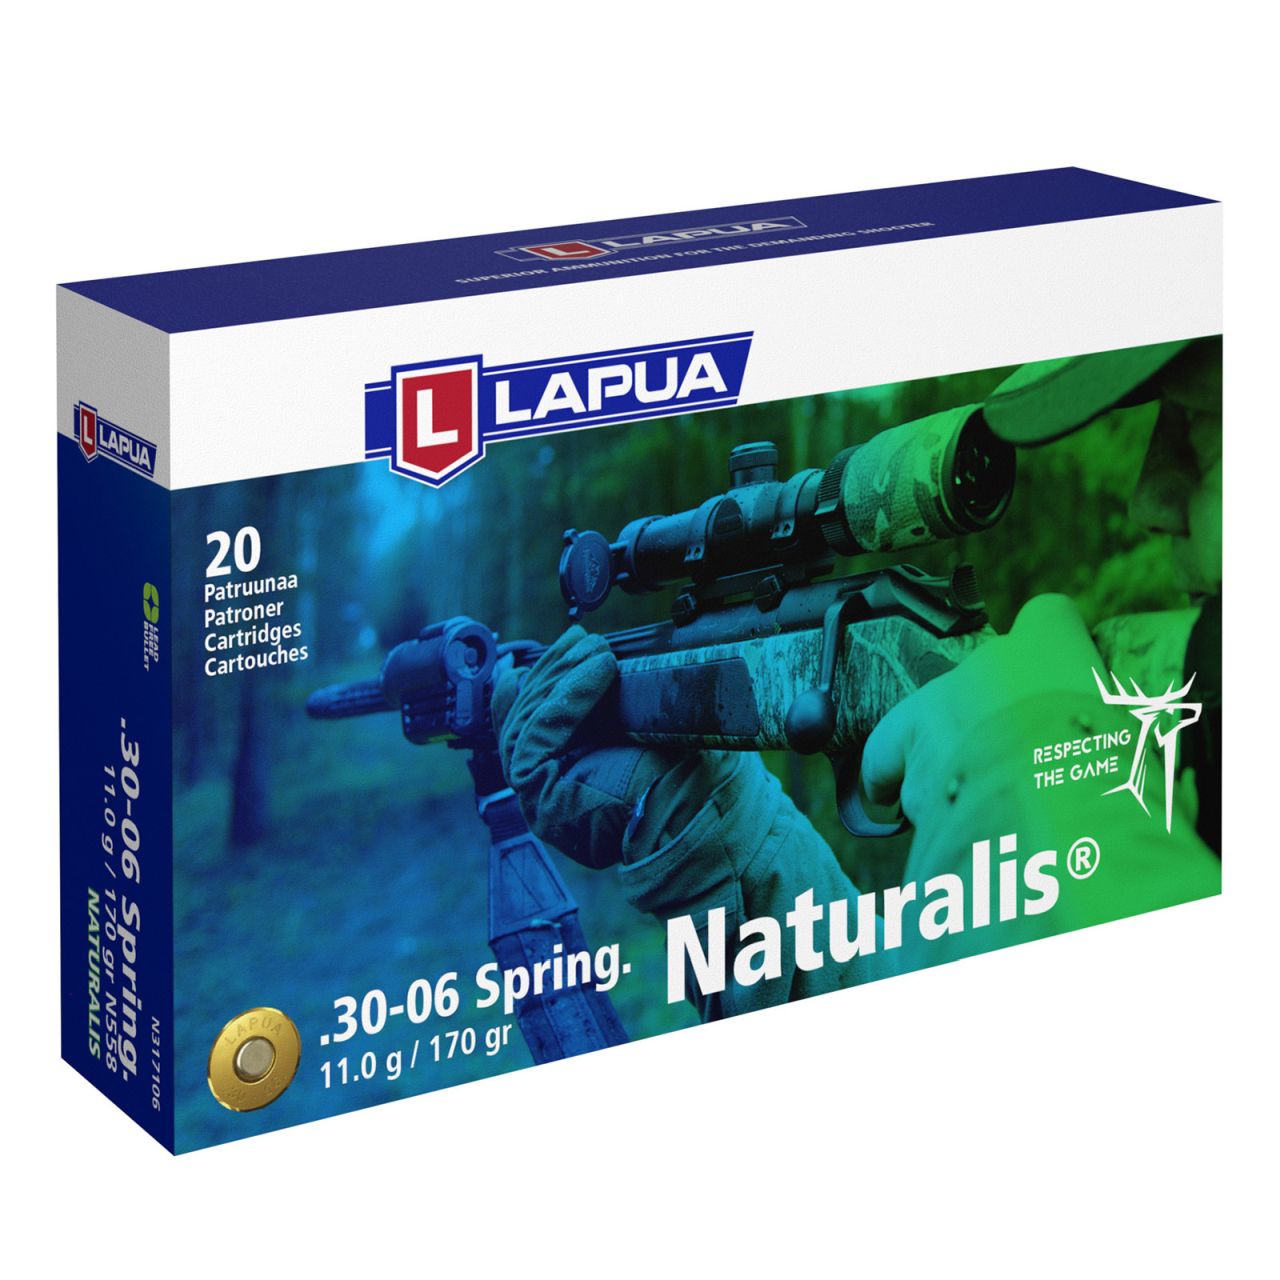 Lapua Naturalis .30-06 11g 20 Schuss